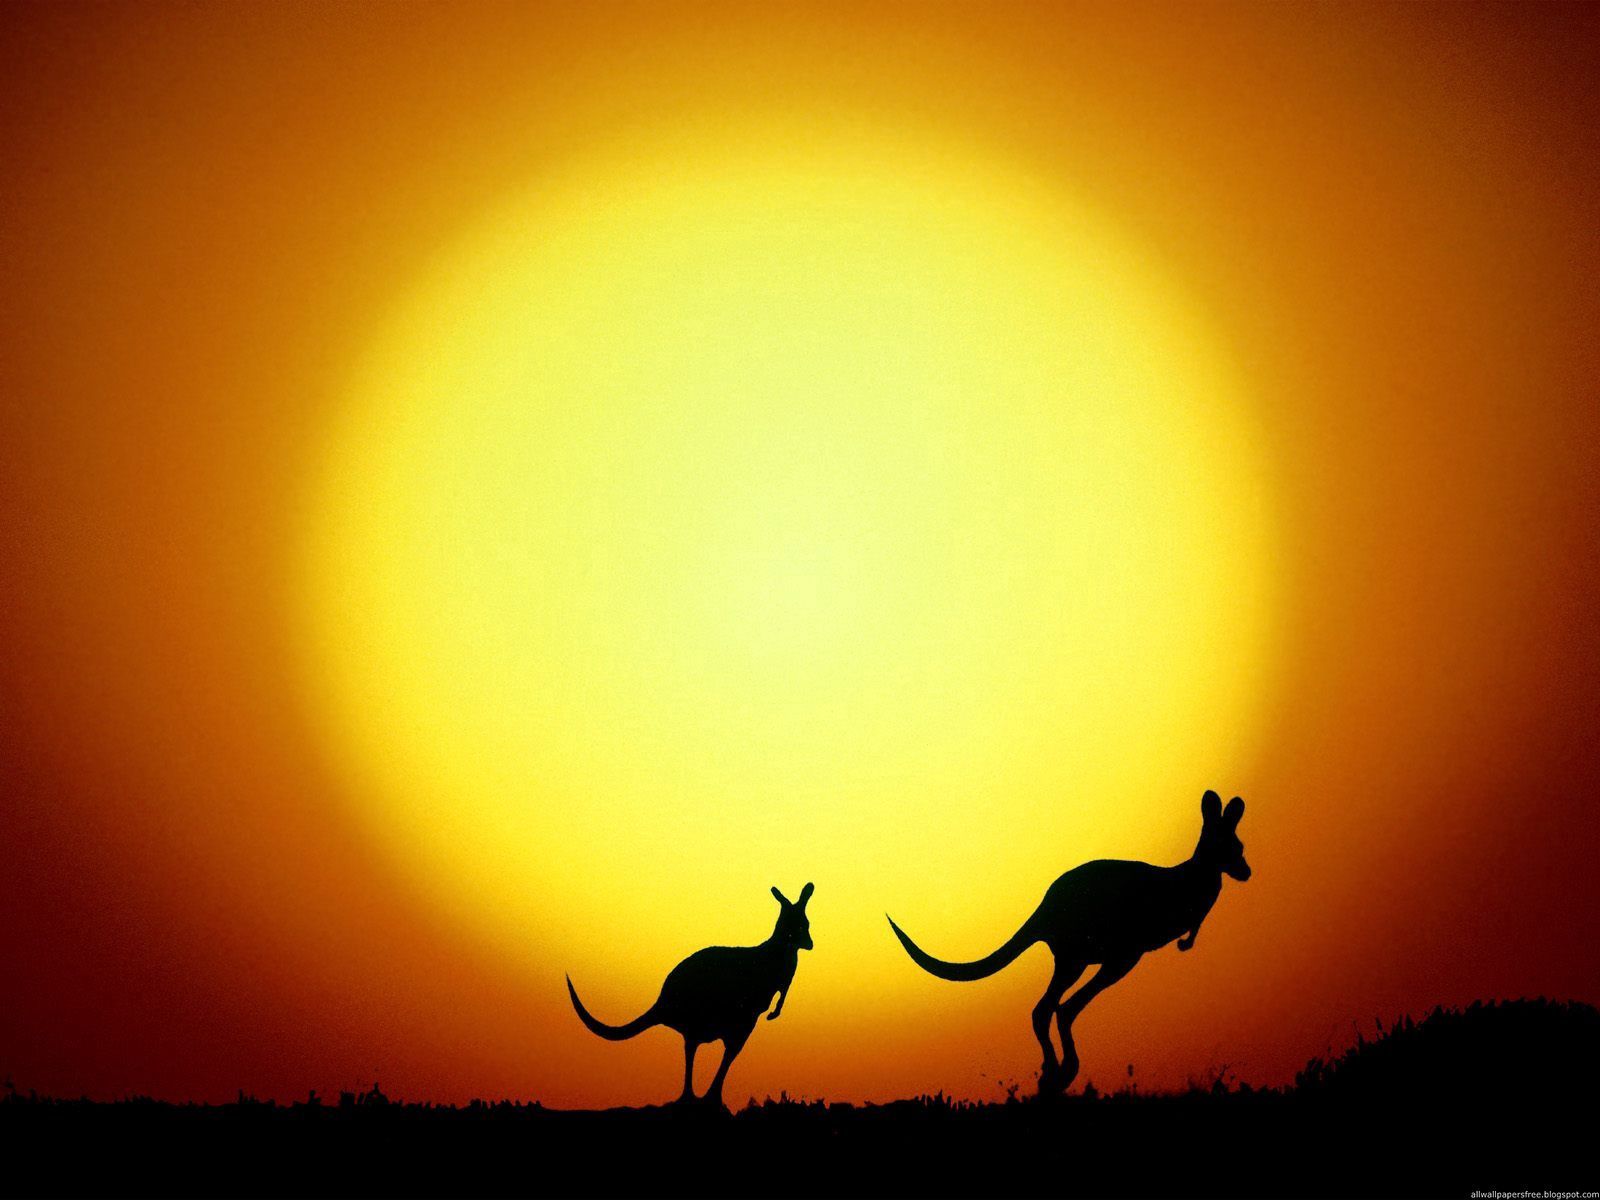 australia, sunset, evening, nature, kangaroo, silhouettes